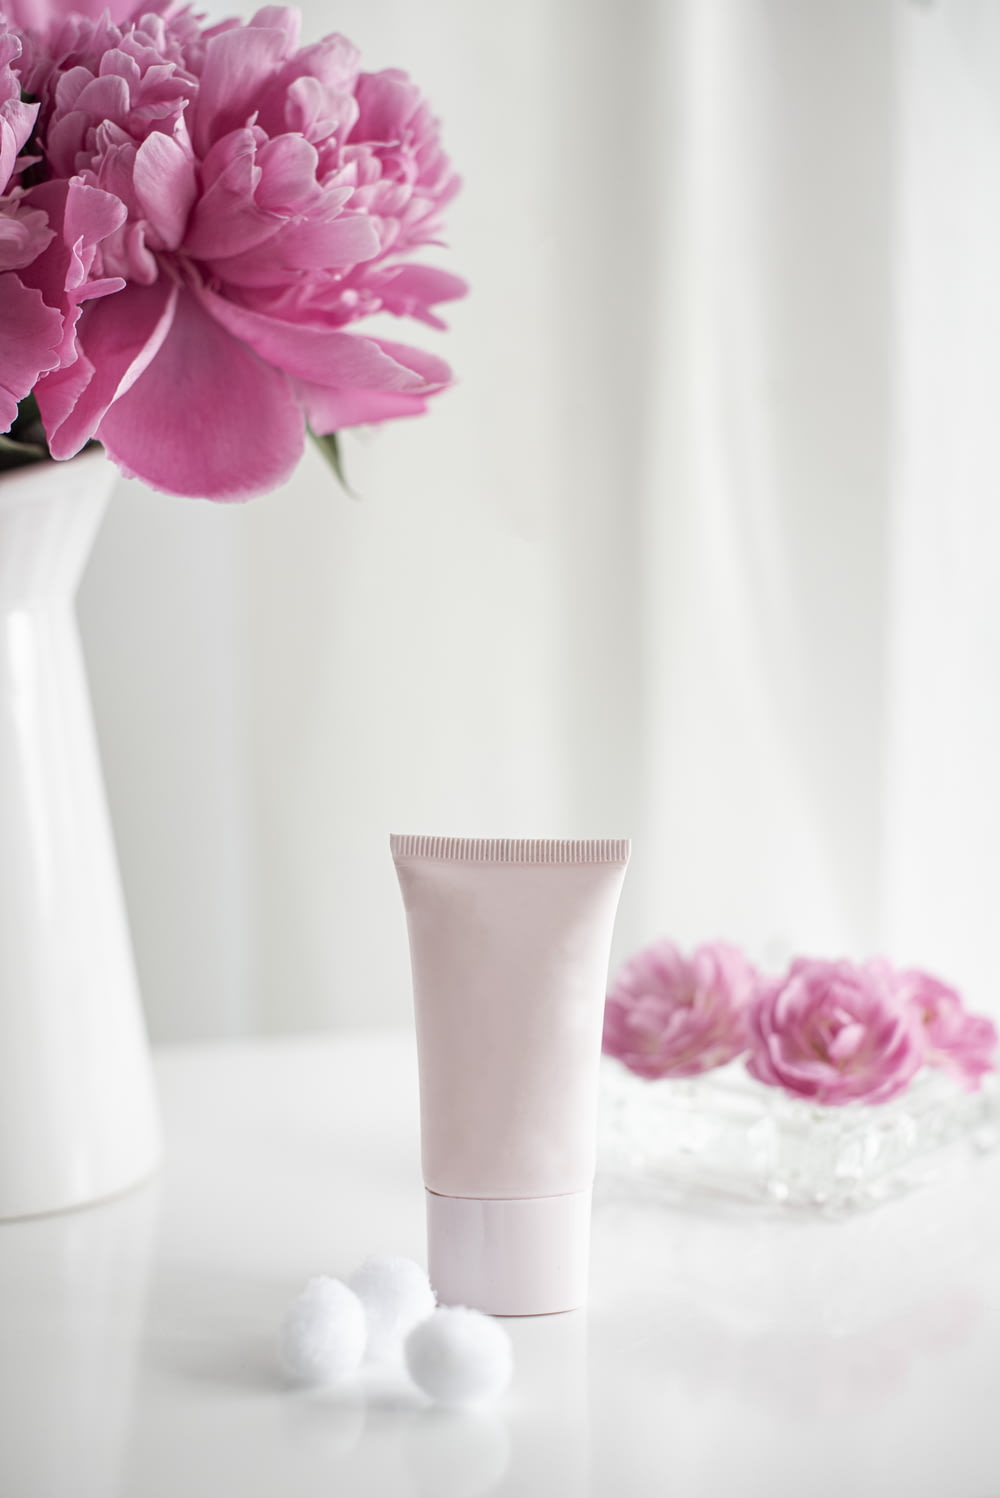 fiore rosa in vaso di ceramica bianca